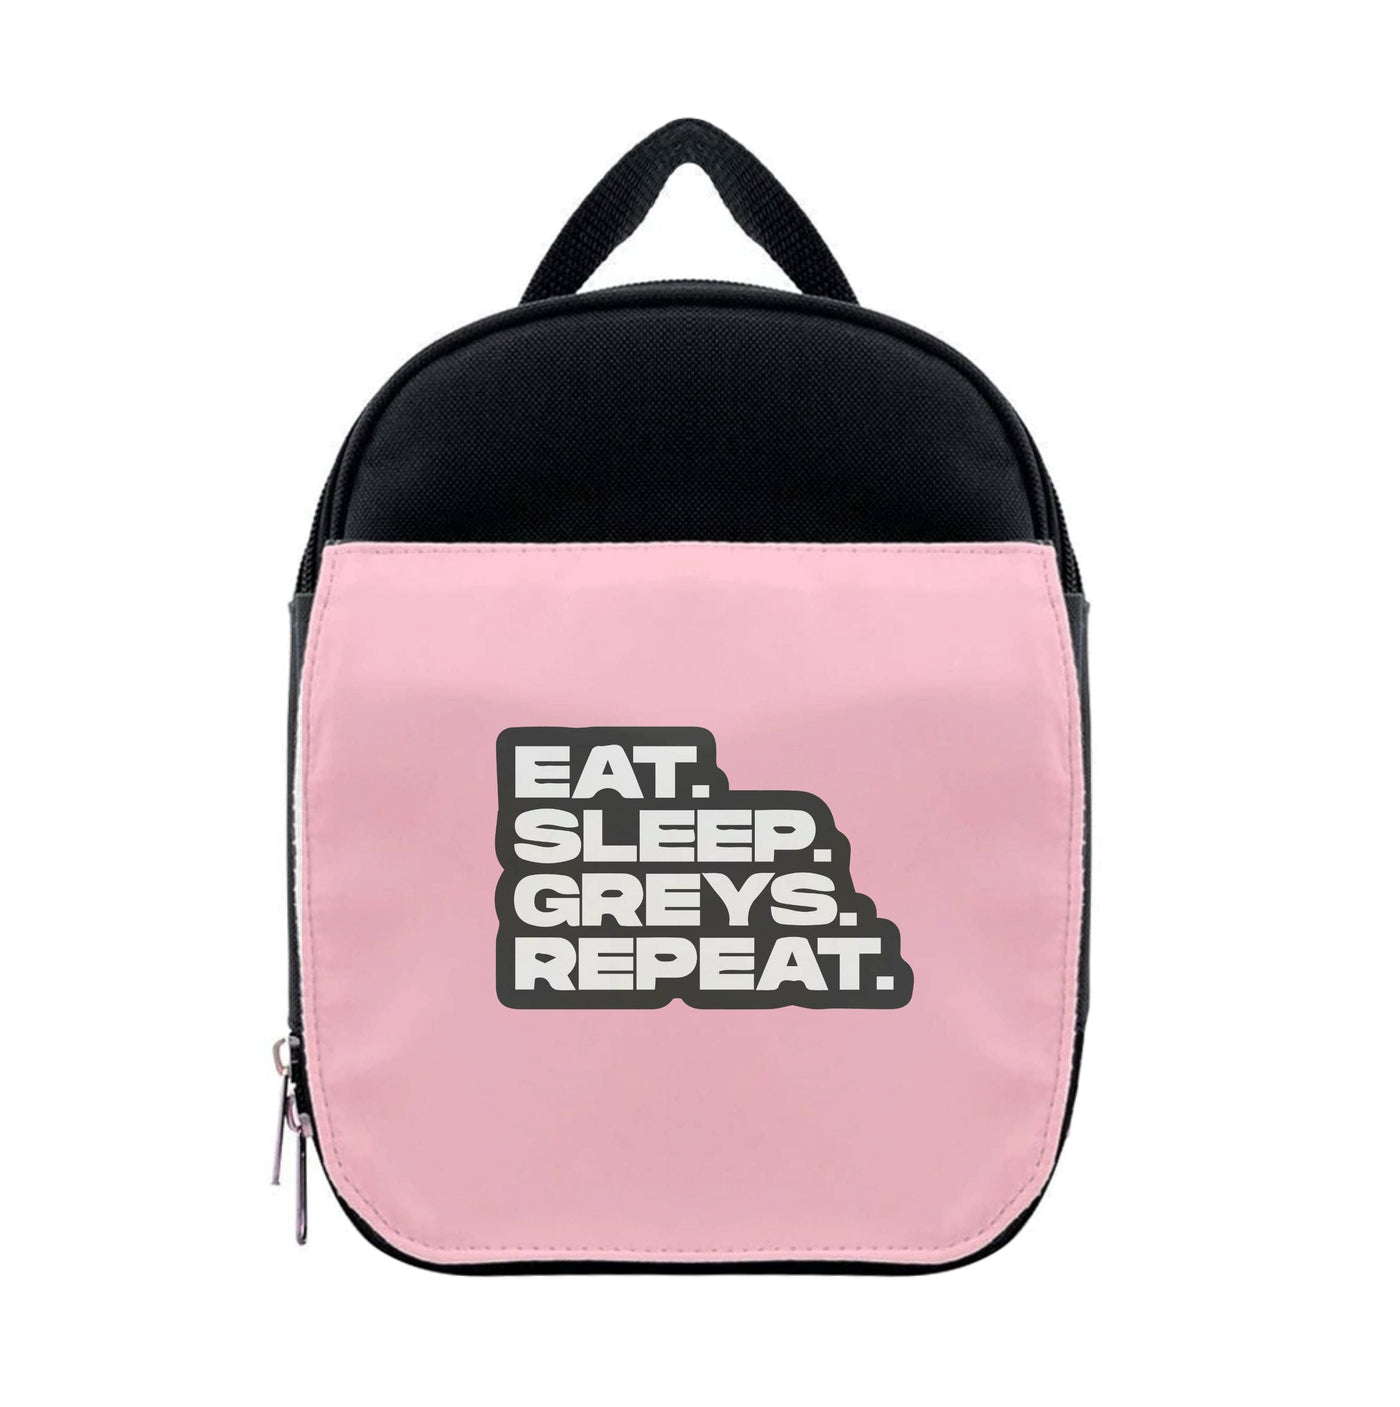 Eat. Sleep. Greys. Repeat. - Grey's Anatomy Lunchbox